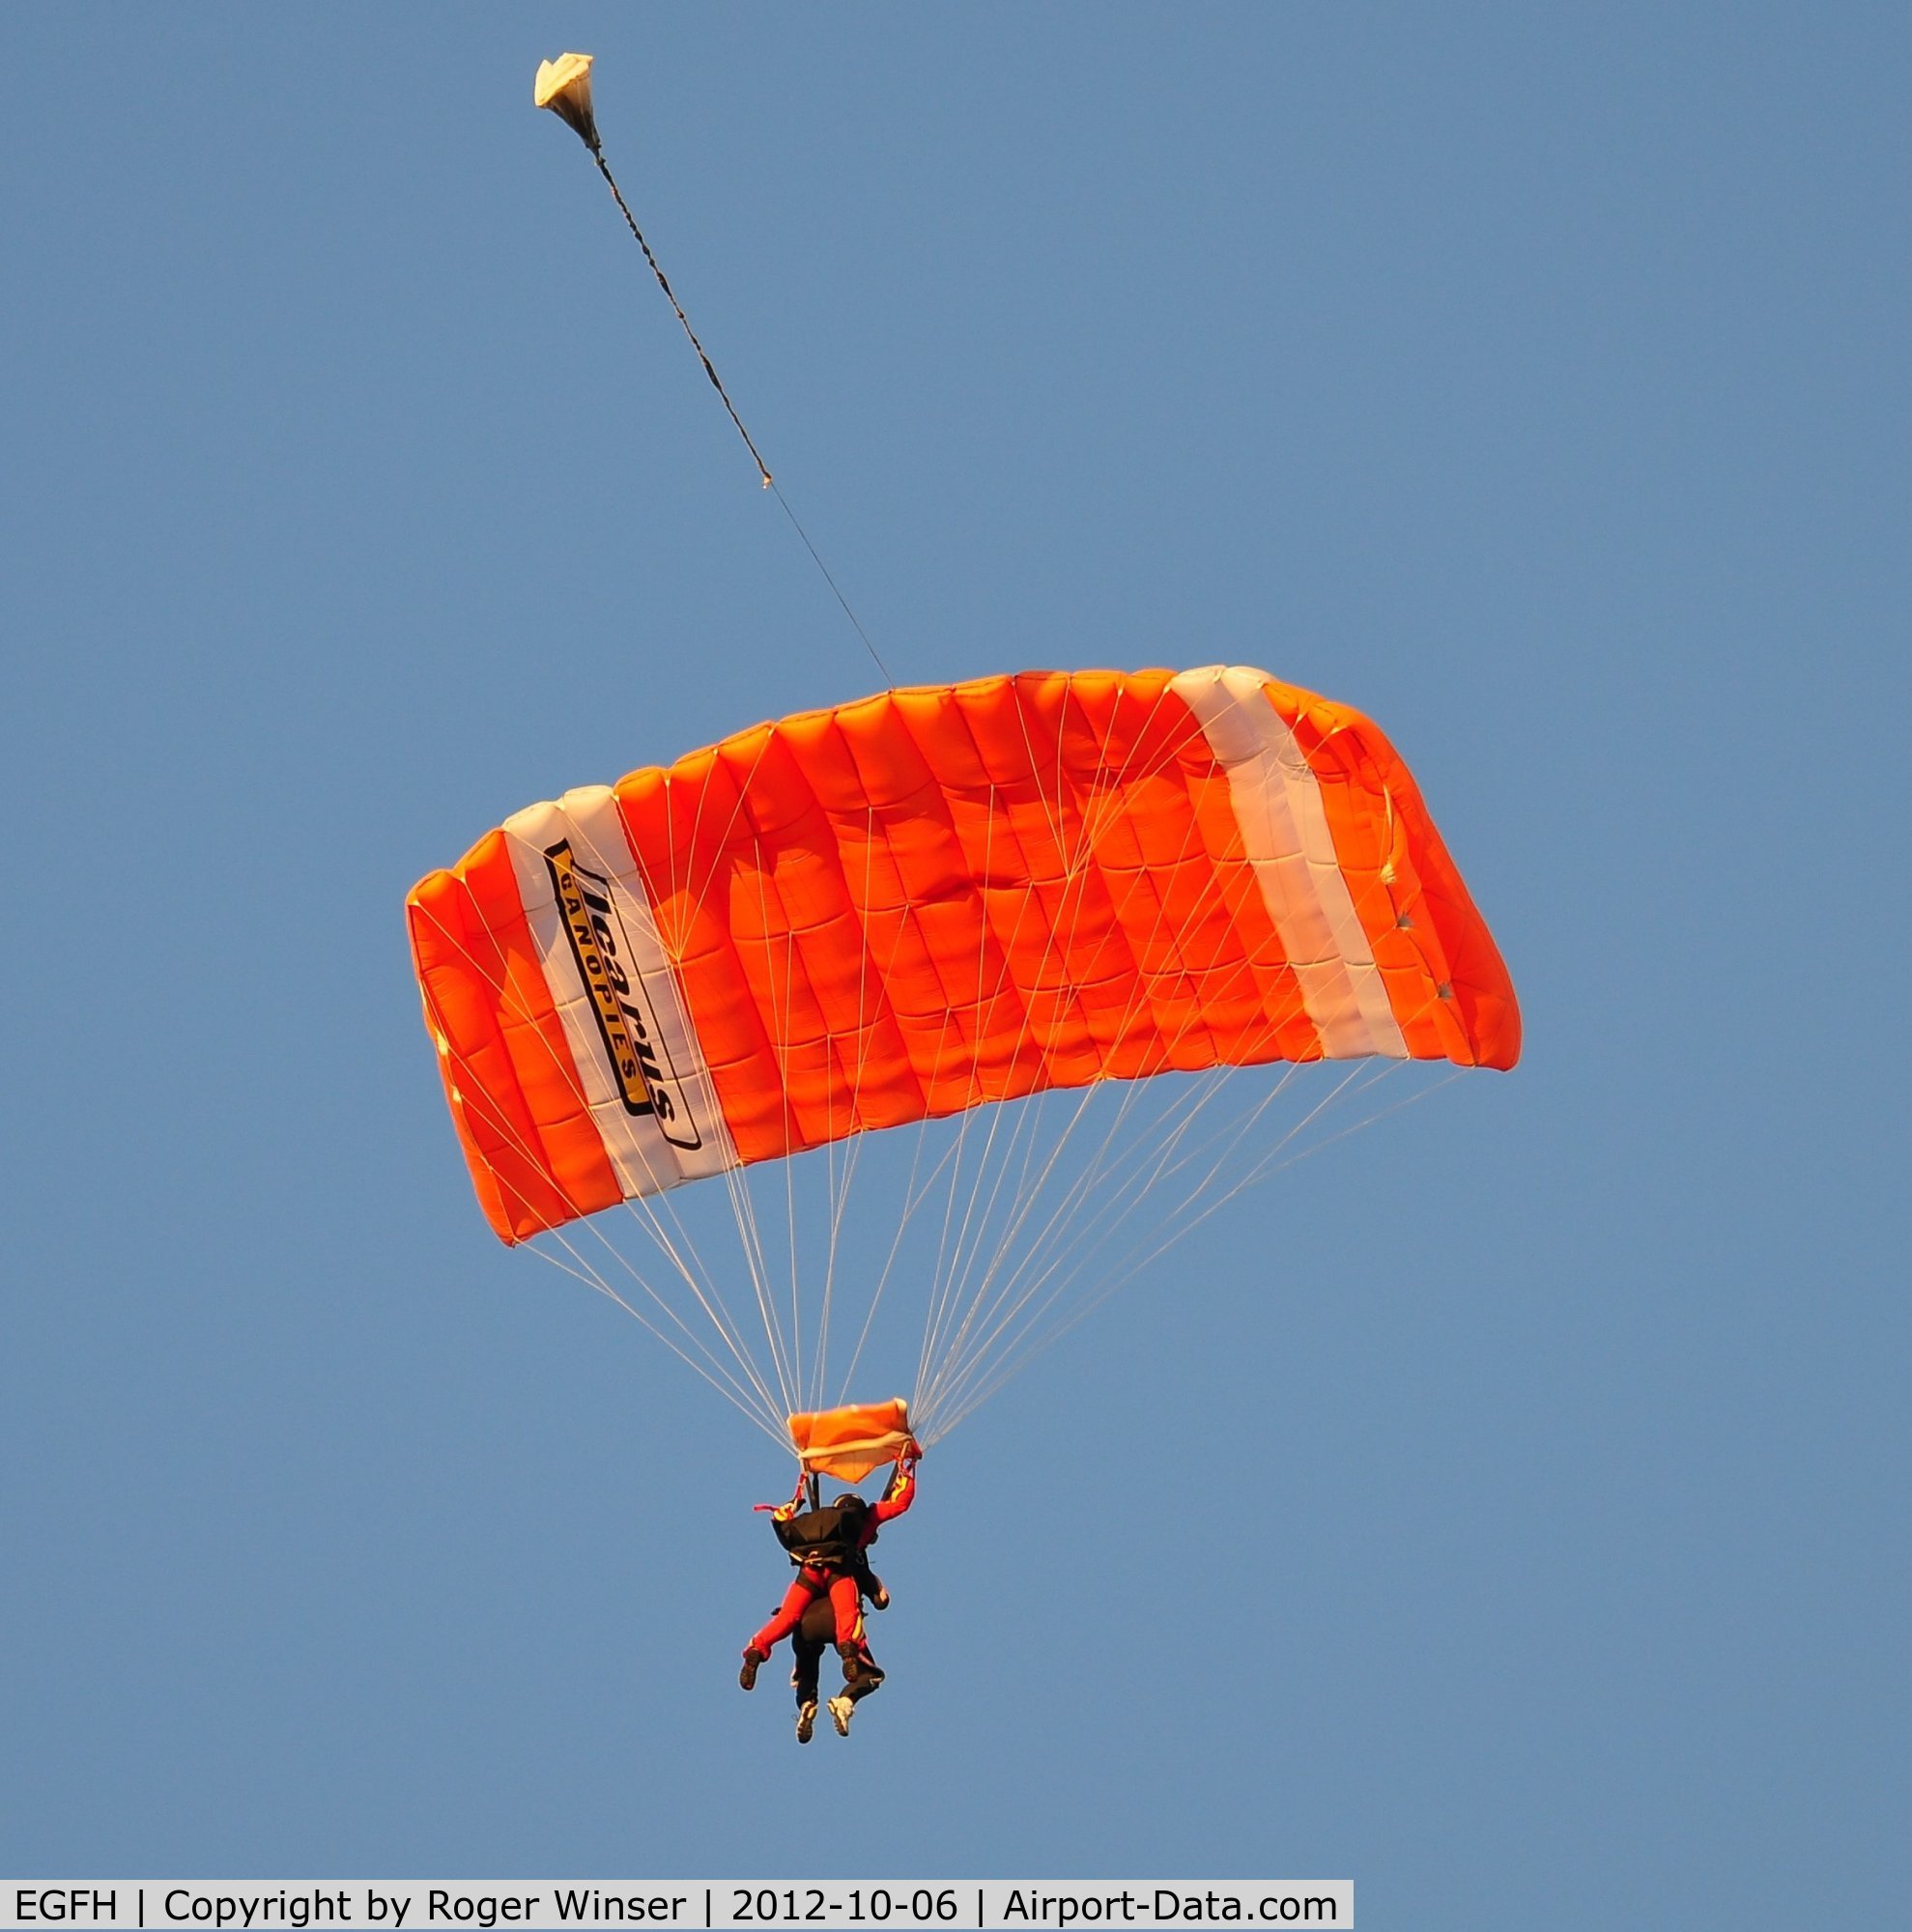 Swansea Airport, Swansea, Wales United Kingdom (EGFH) - Tandem skydive for charity with Skydive Swansea.